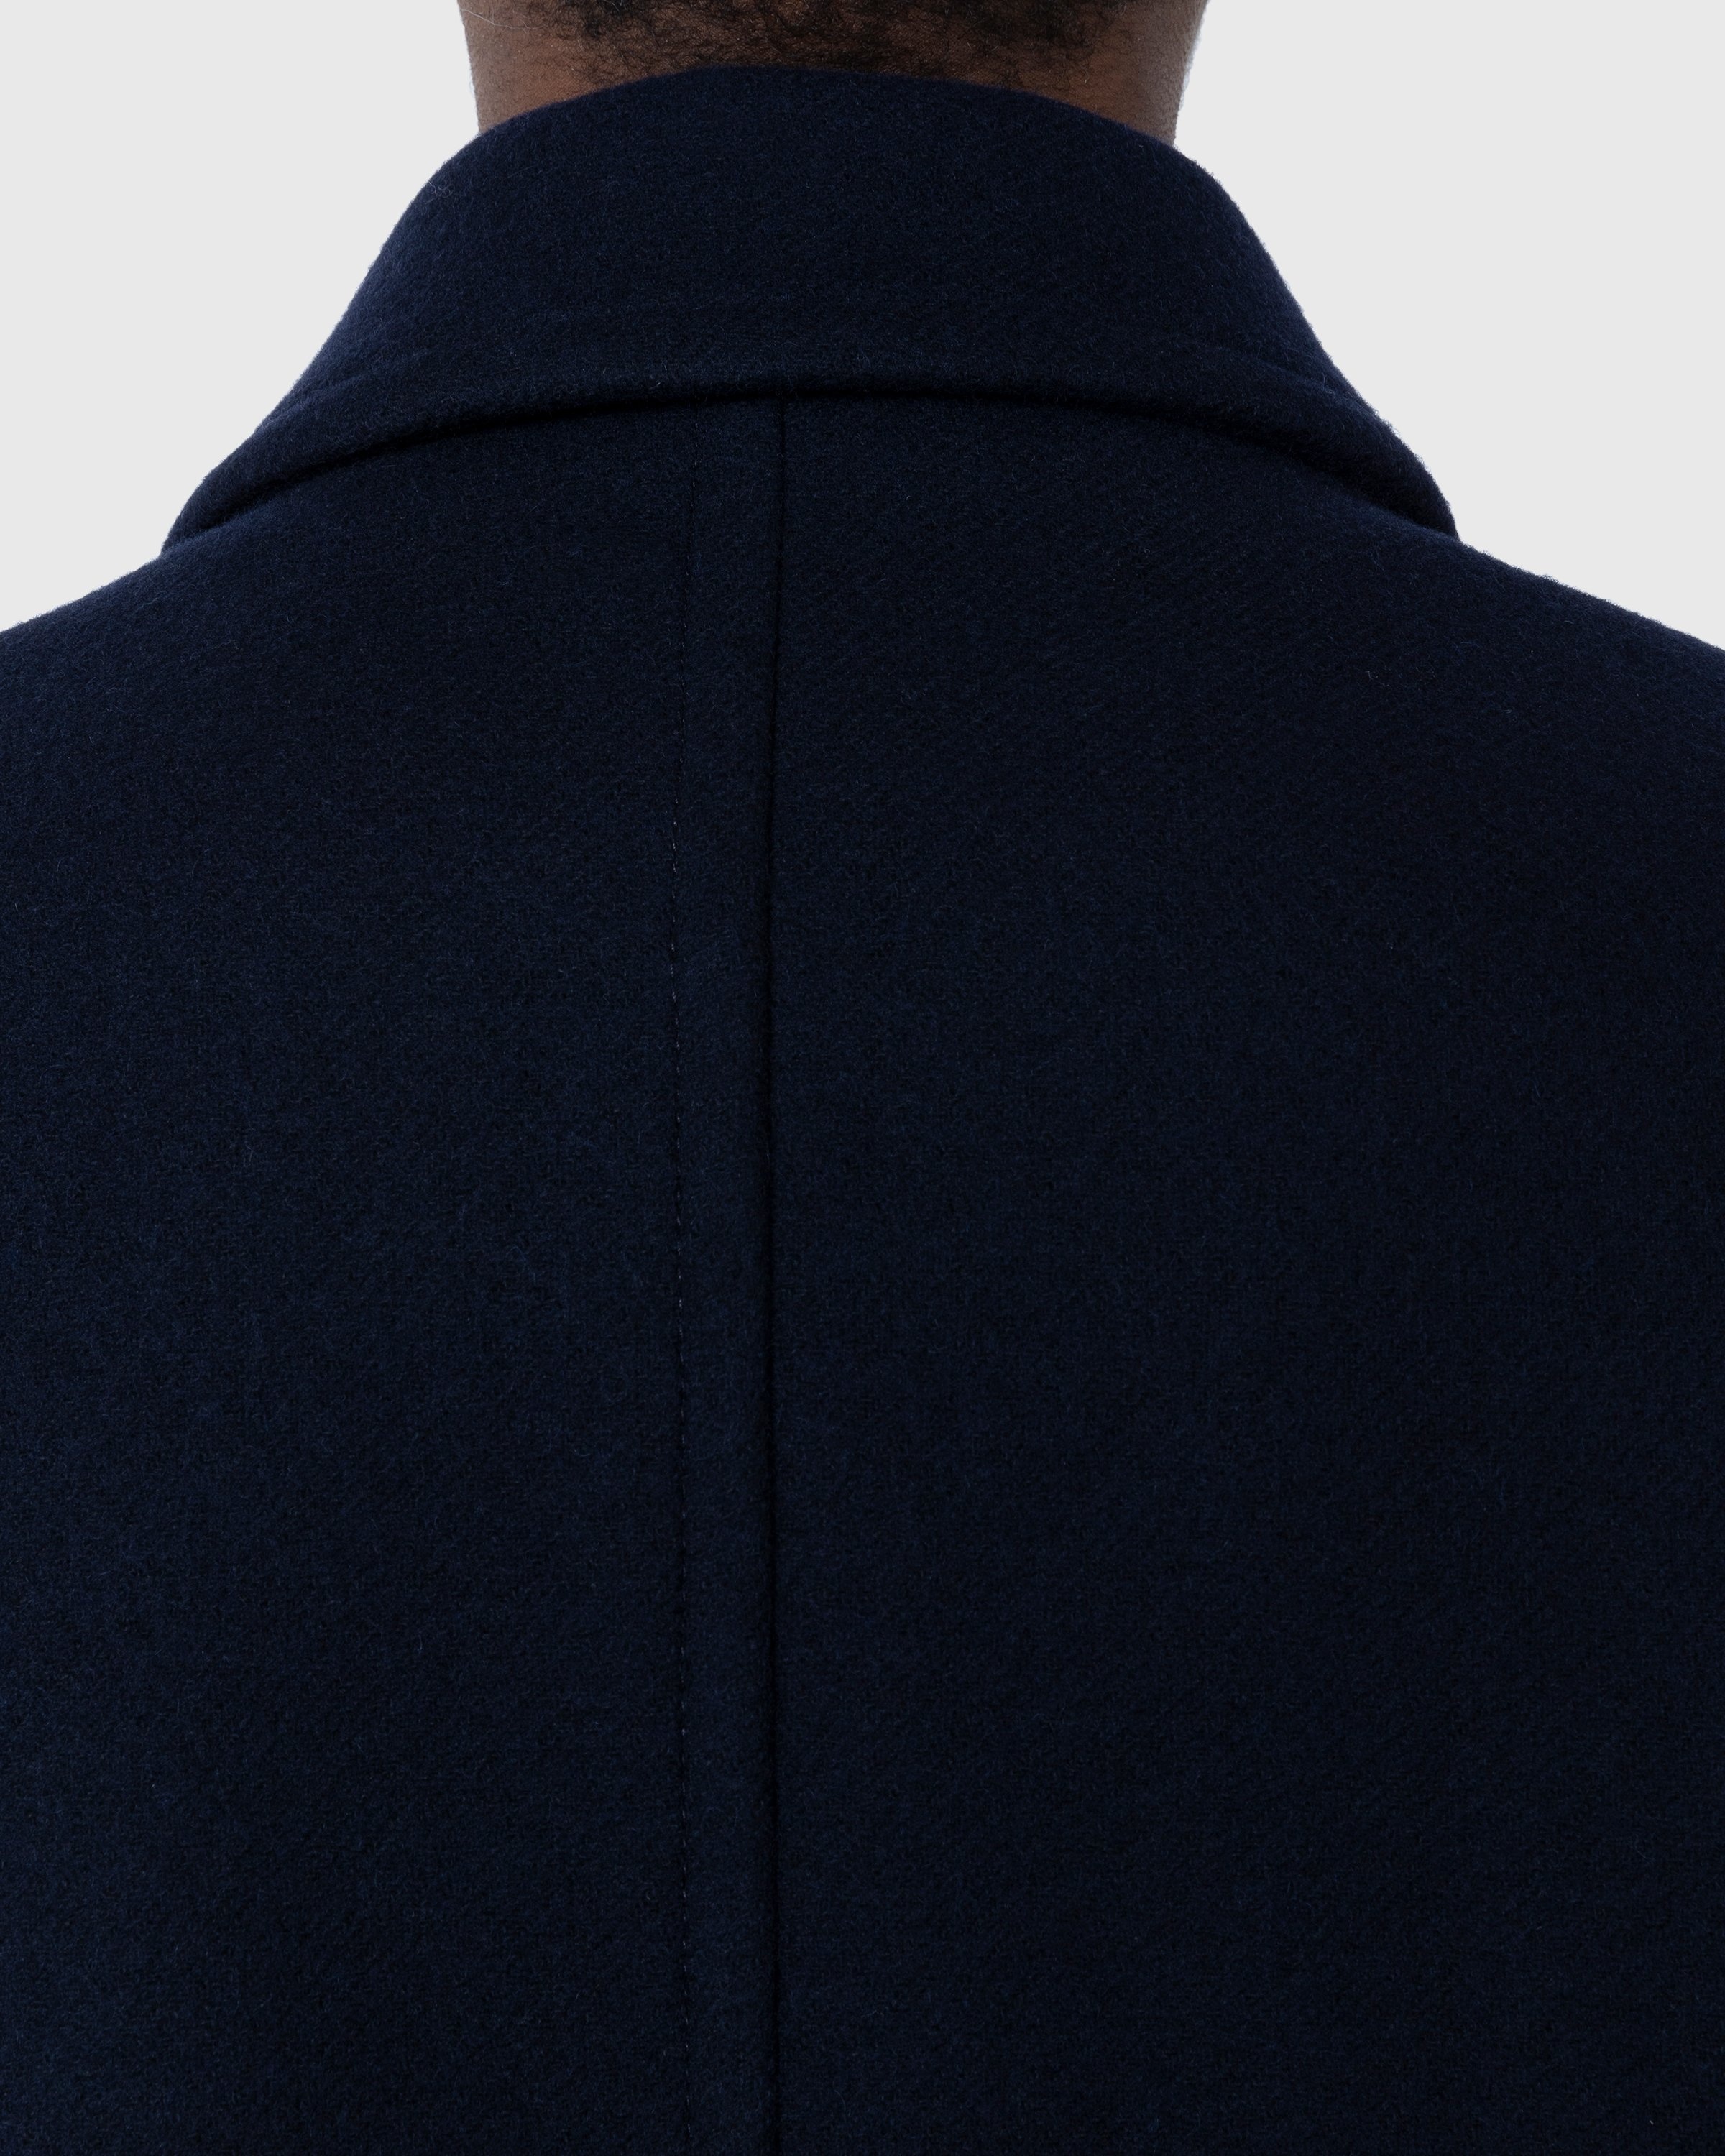 Dries van Noten – Ronnor Workwear Jacket Navy - Jackets - Blue - Image 6